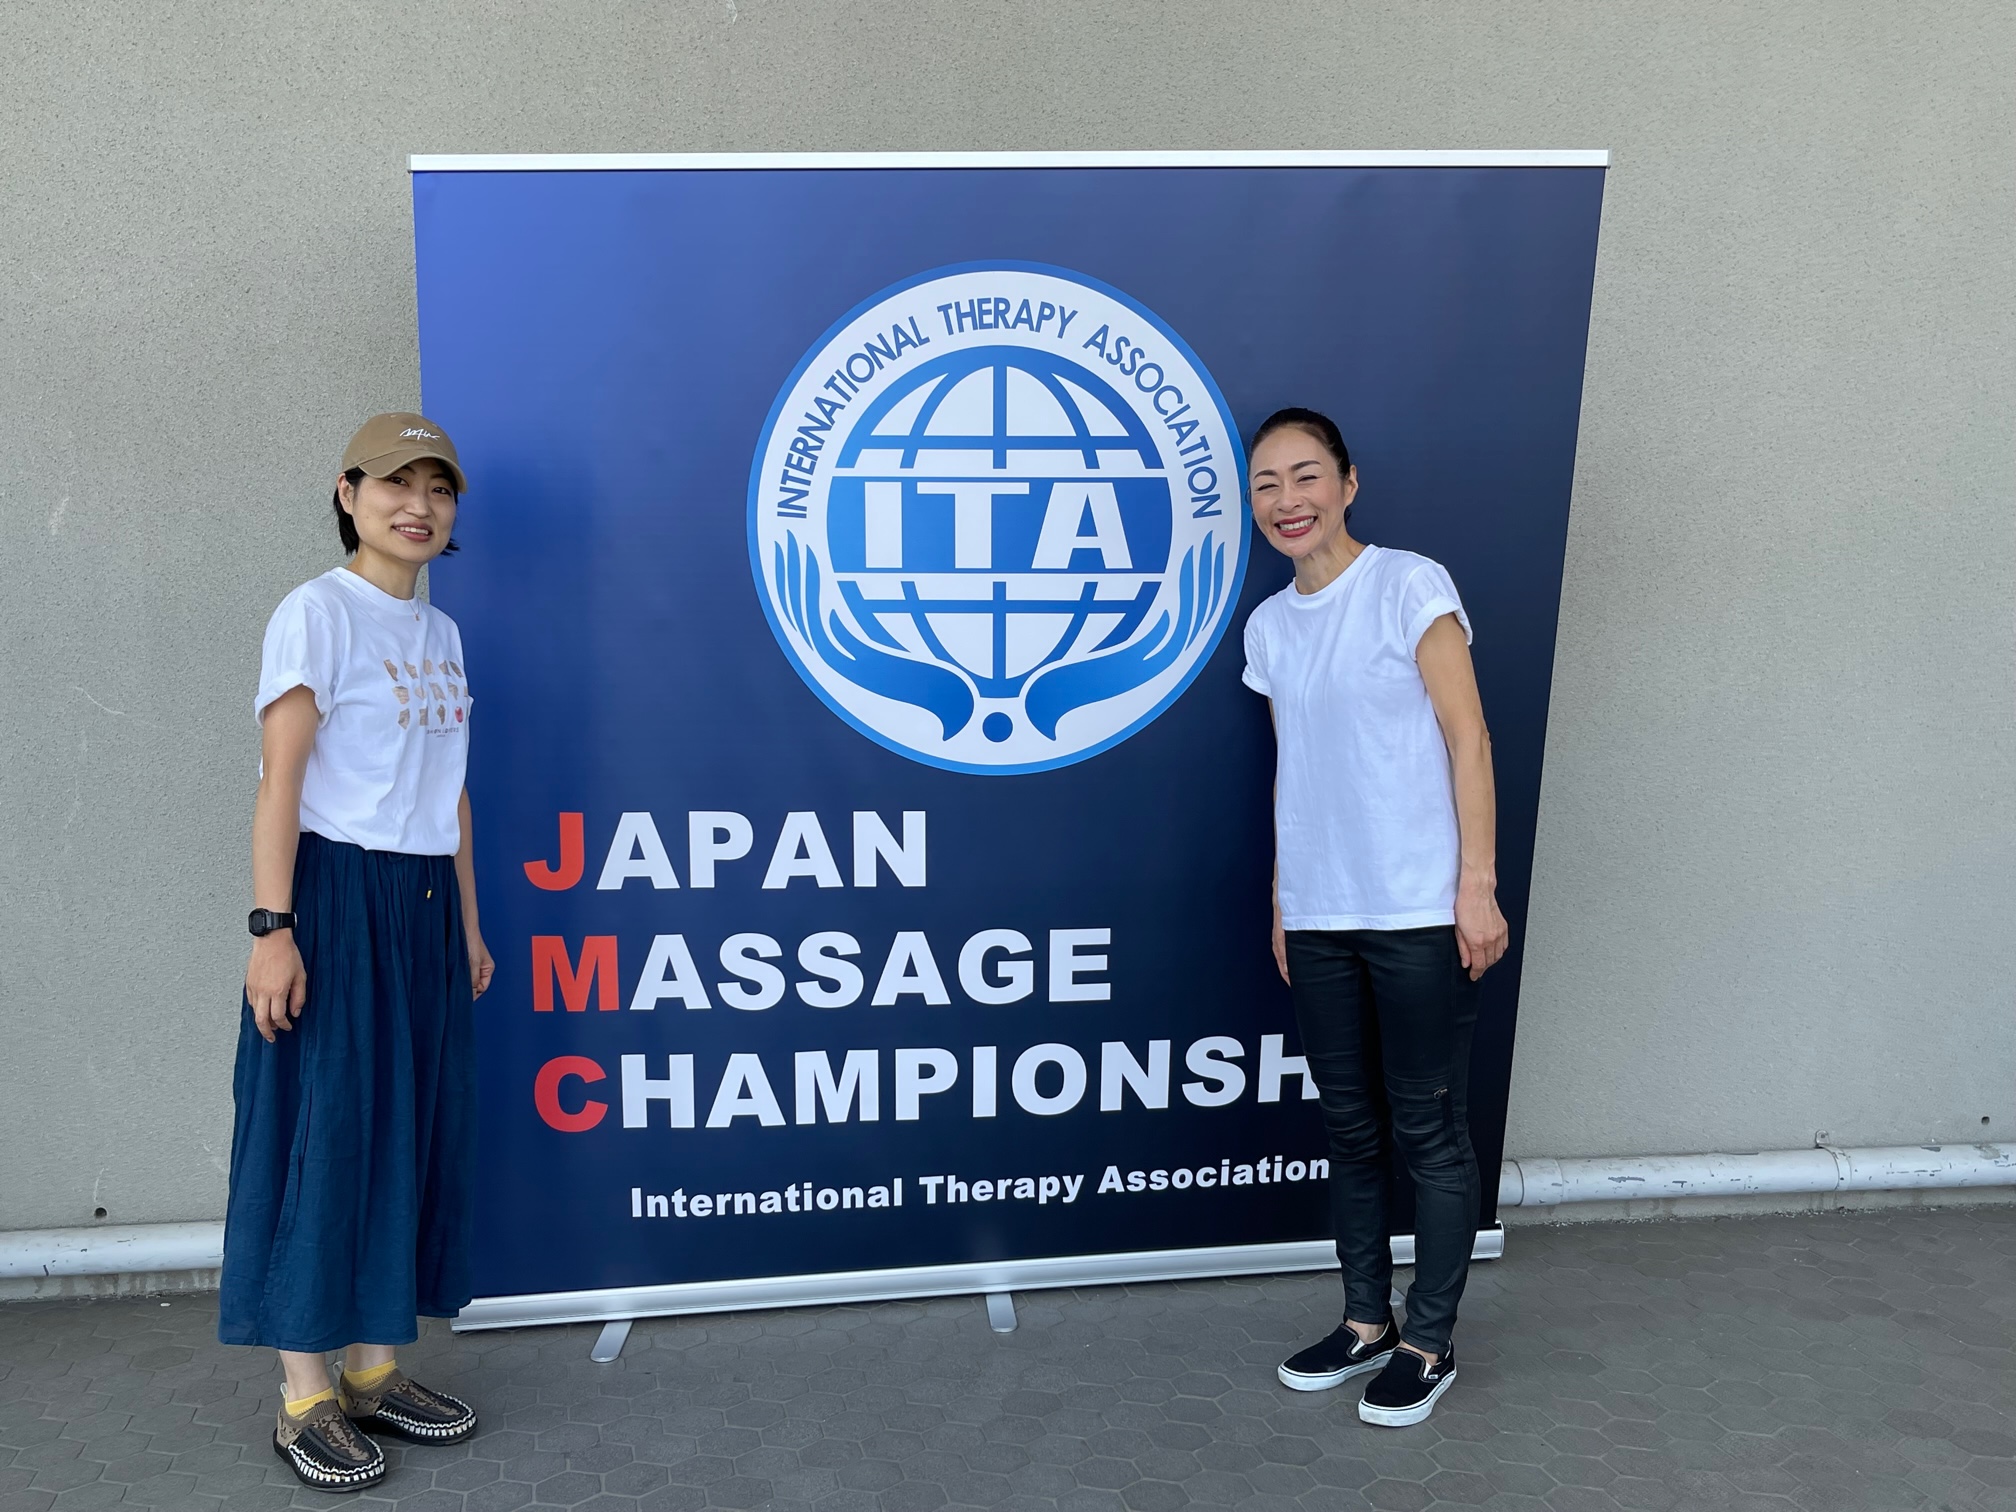 japan massage champion ship